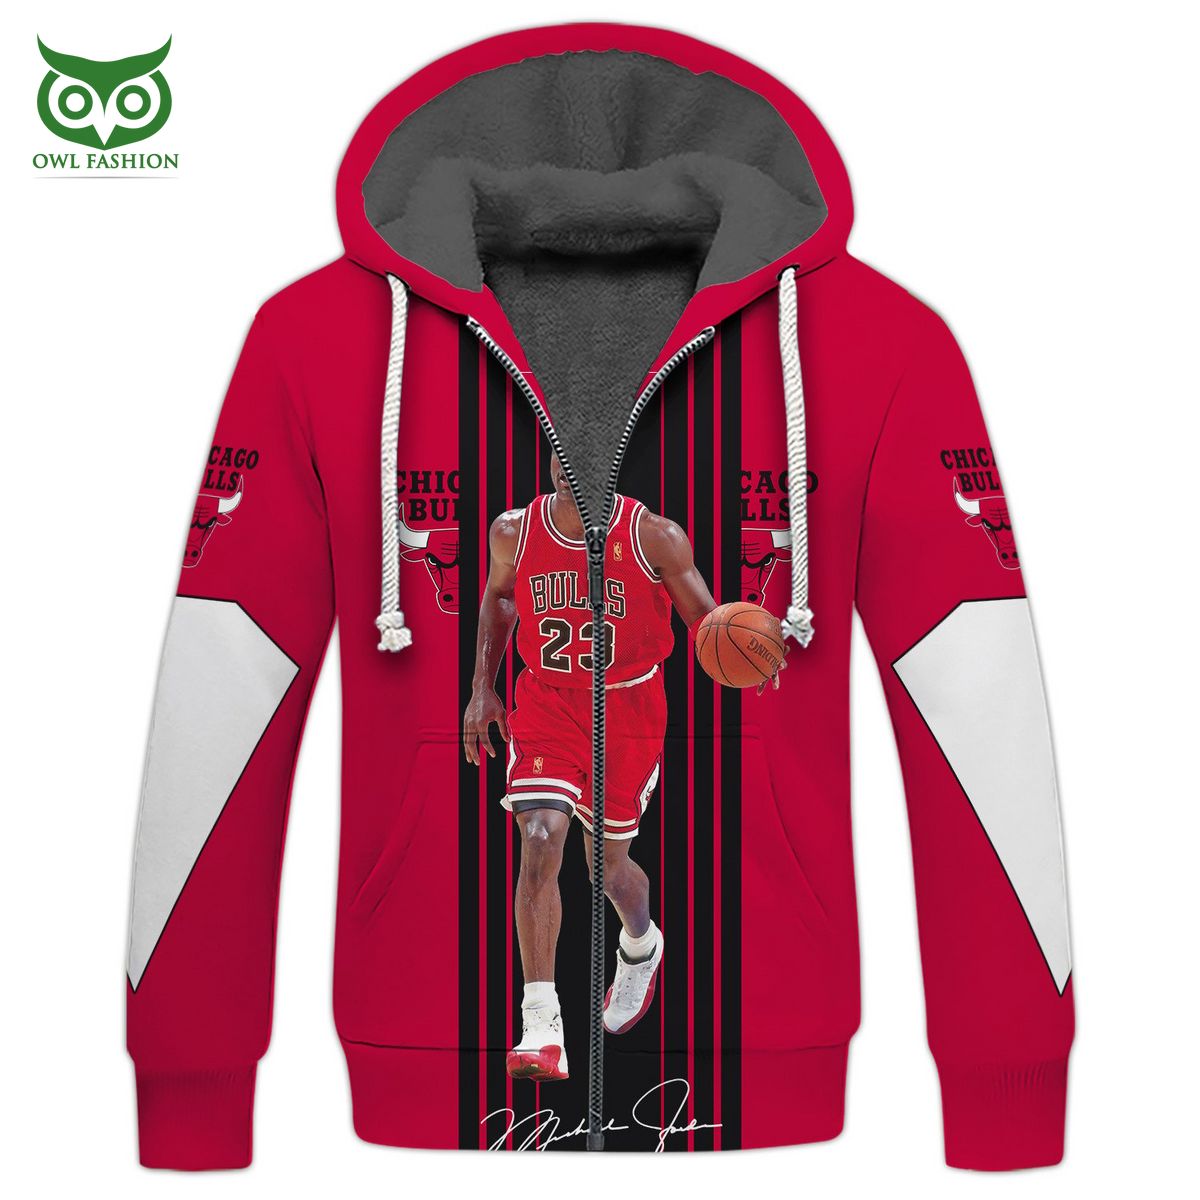 The Last Dance Michael Jordan 23 Chicago Bulls 3D TShirt Hoodie